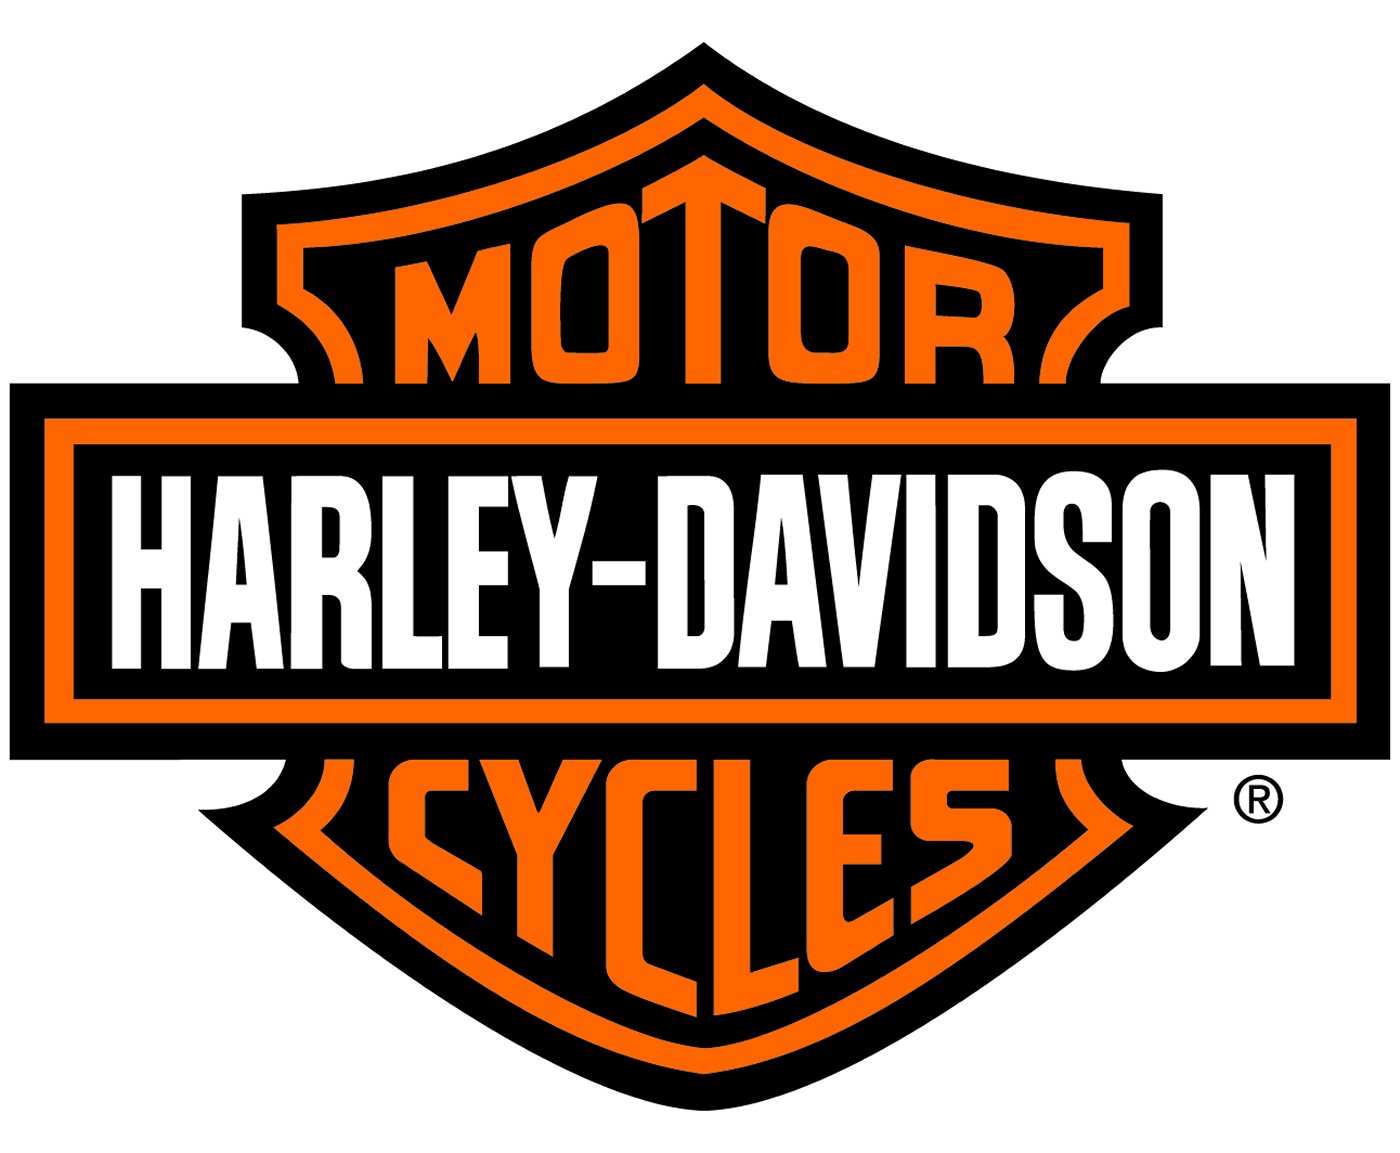 Logo Wallpaper Collection Harley Devidson Wallaper